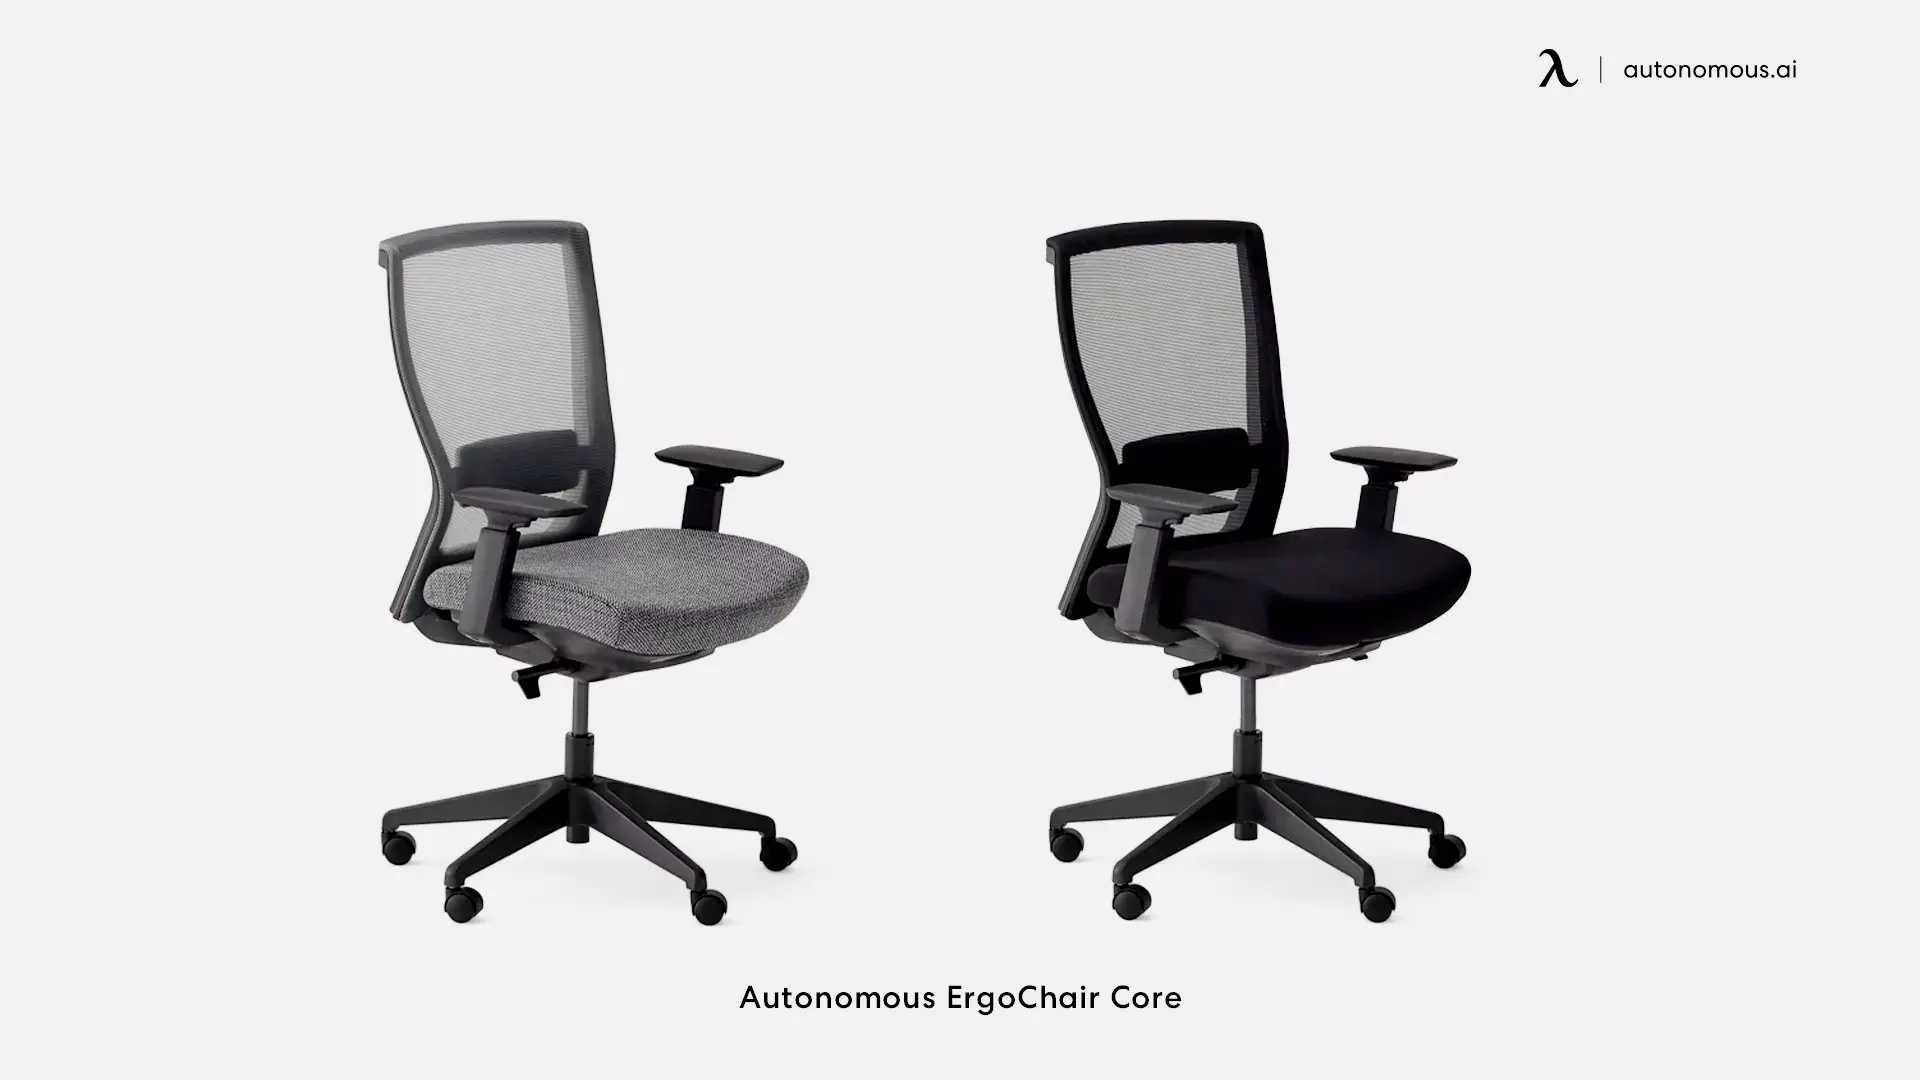 ErgoChair Core swivel task chair